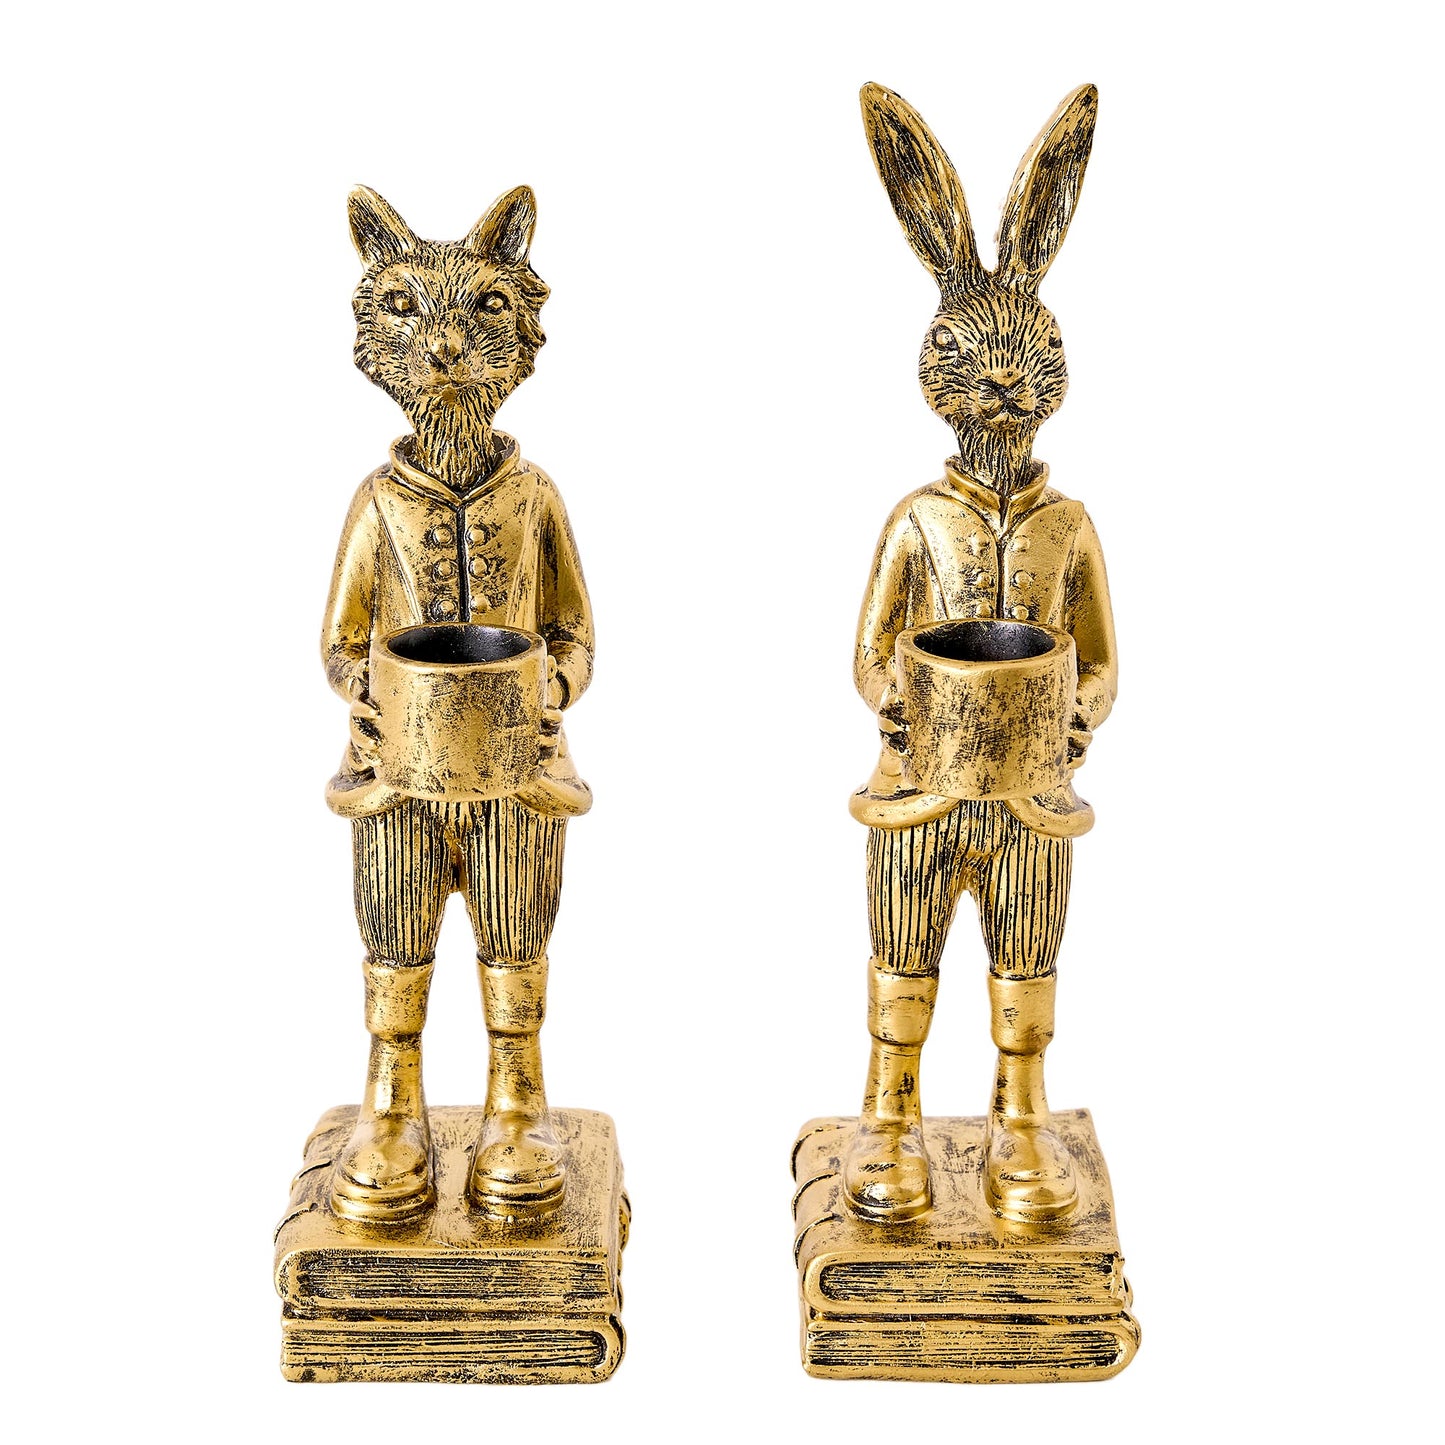 The Fox and Rabbit Gold Resin Tabletop Bar Decor